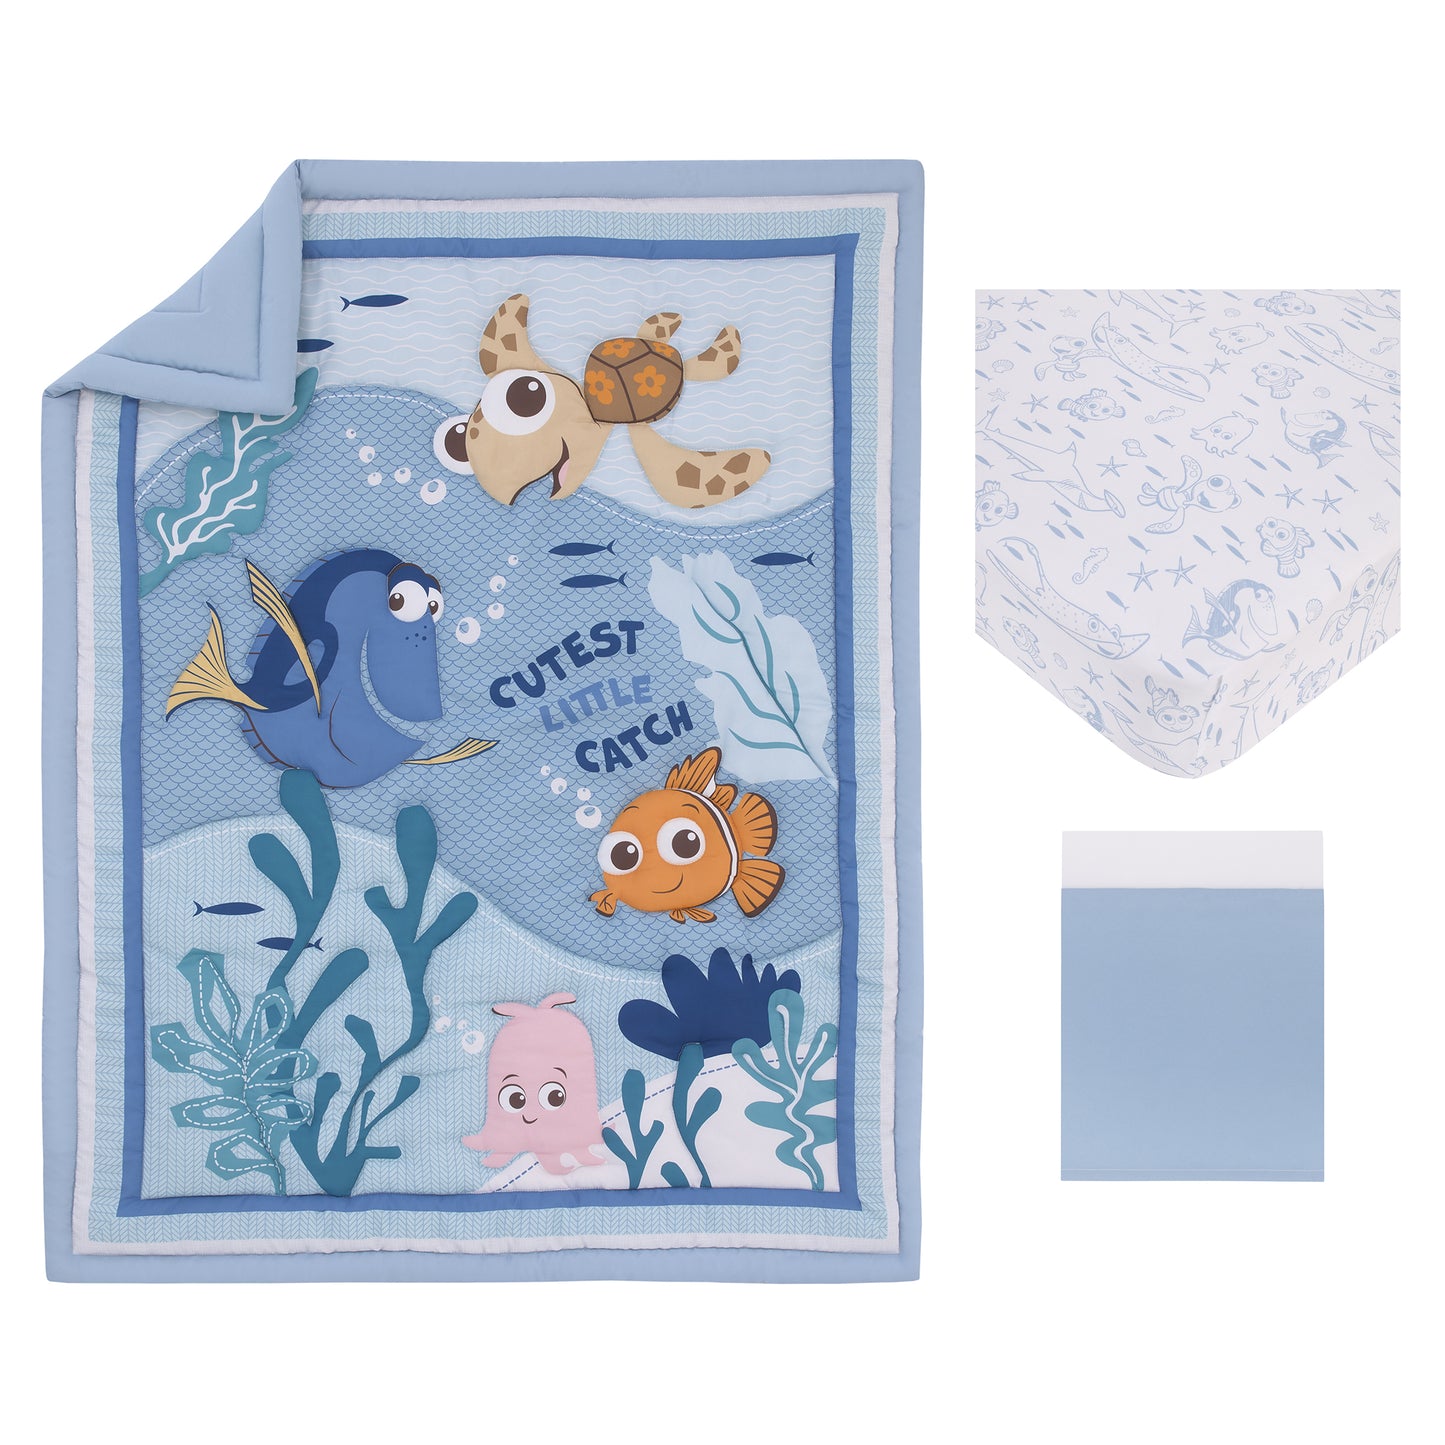 Disney Finding Nemo Cutest Little Catch Light Blue, Orange, and Navy 3 Piece Nursery Crib Bedding Set - Comforter, Fitted Crib Sheet, and Crib Skirt